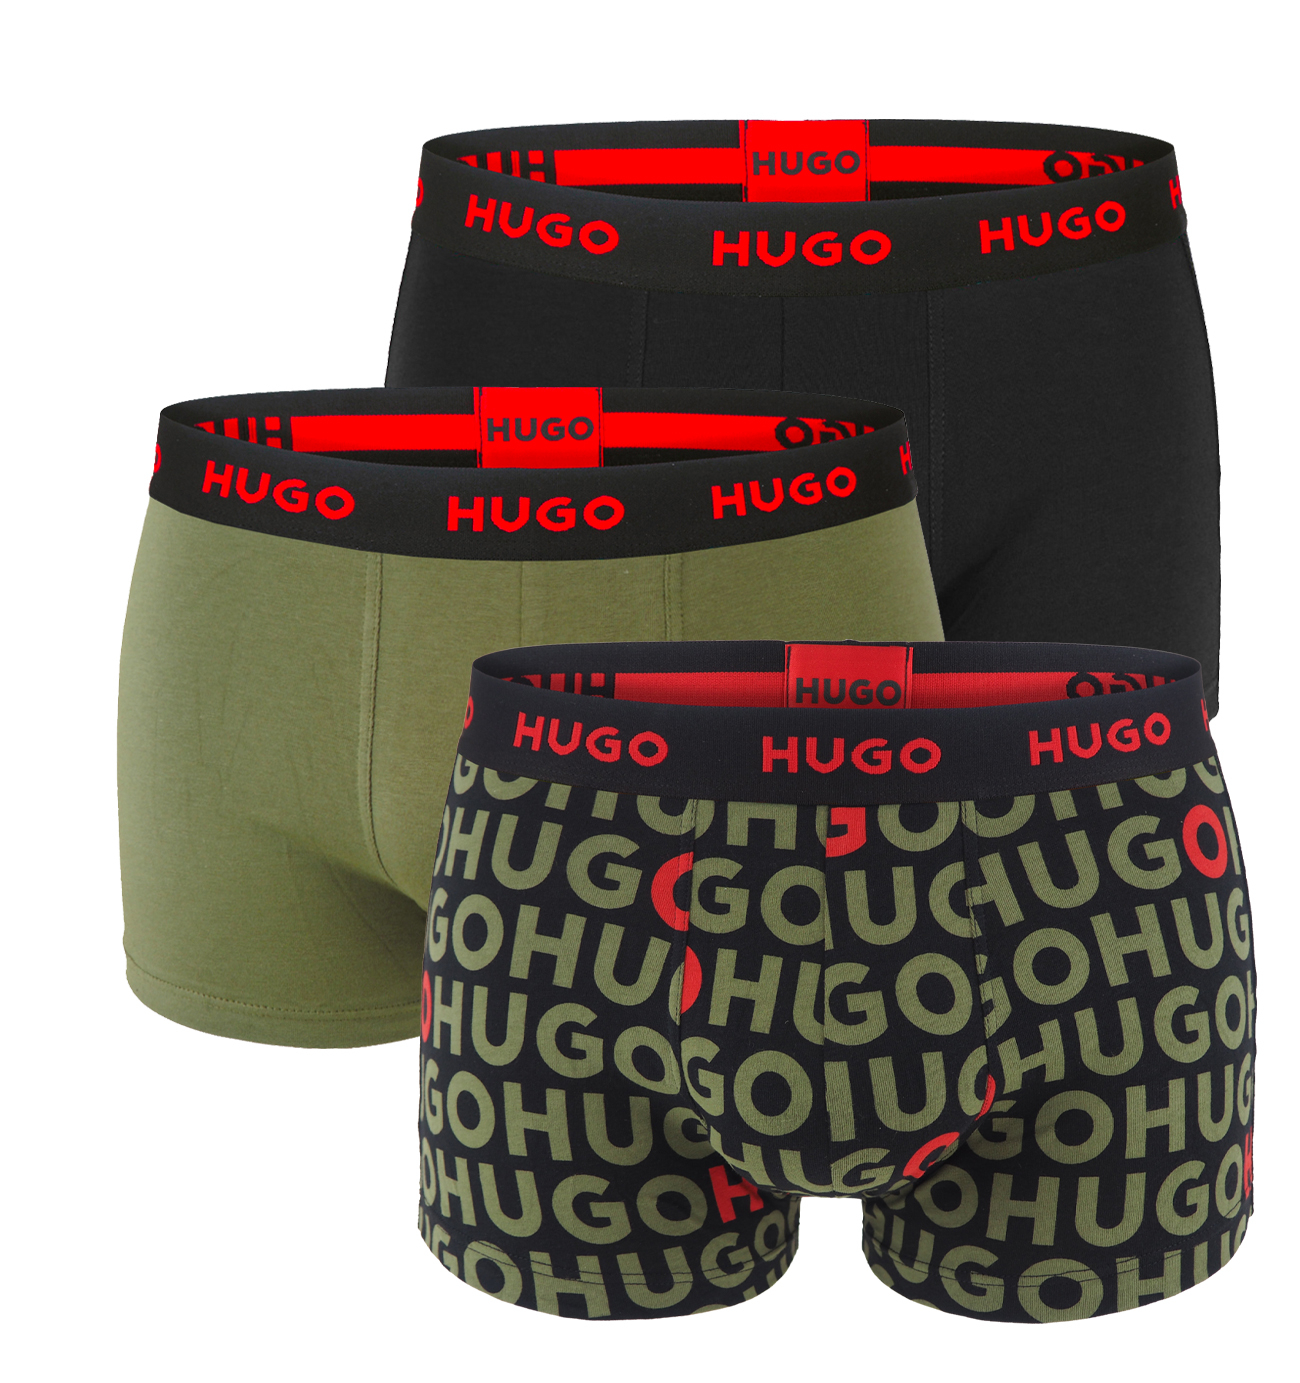 HUGO - boxerky 3PACK cotton stretch army green combo with red logo - limitovaná fashion edícia (HUGO BOSS)